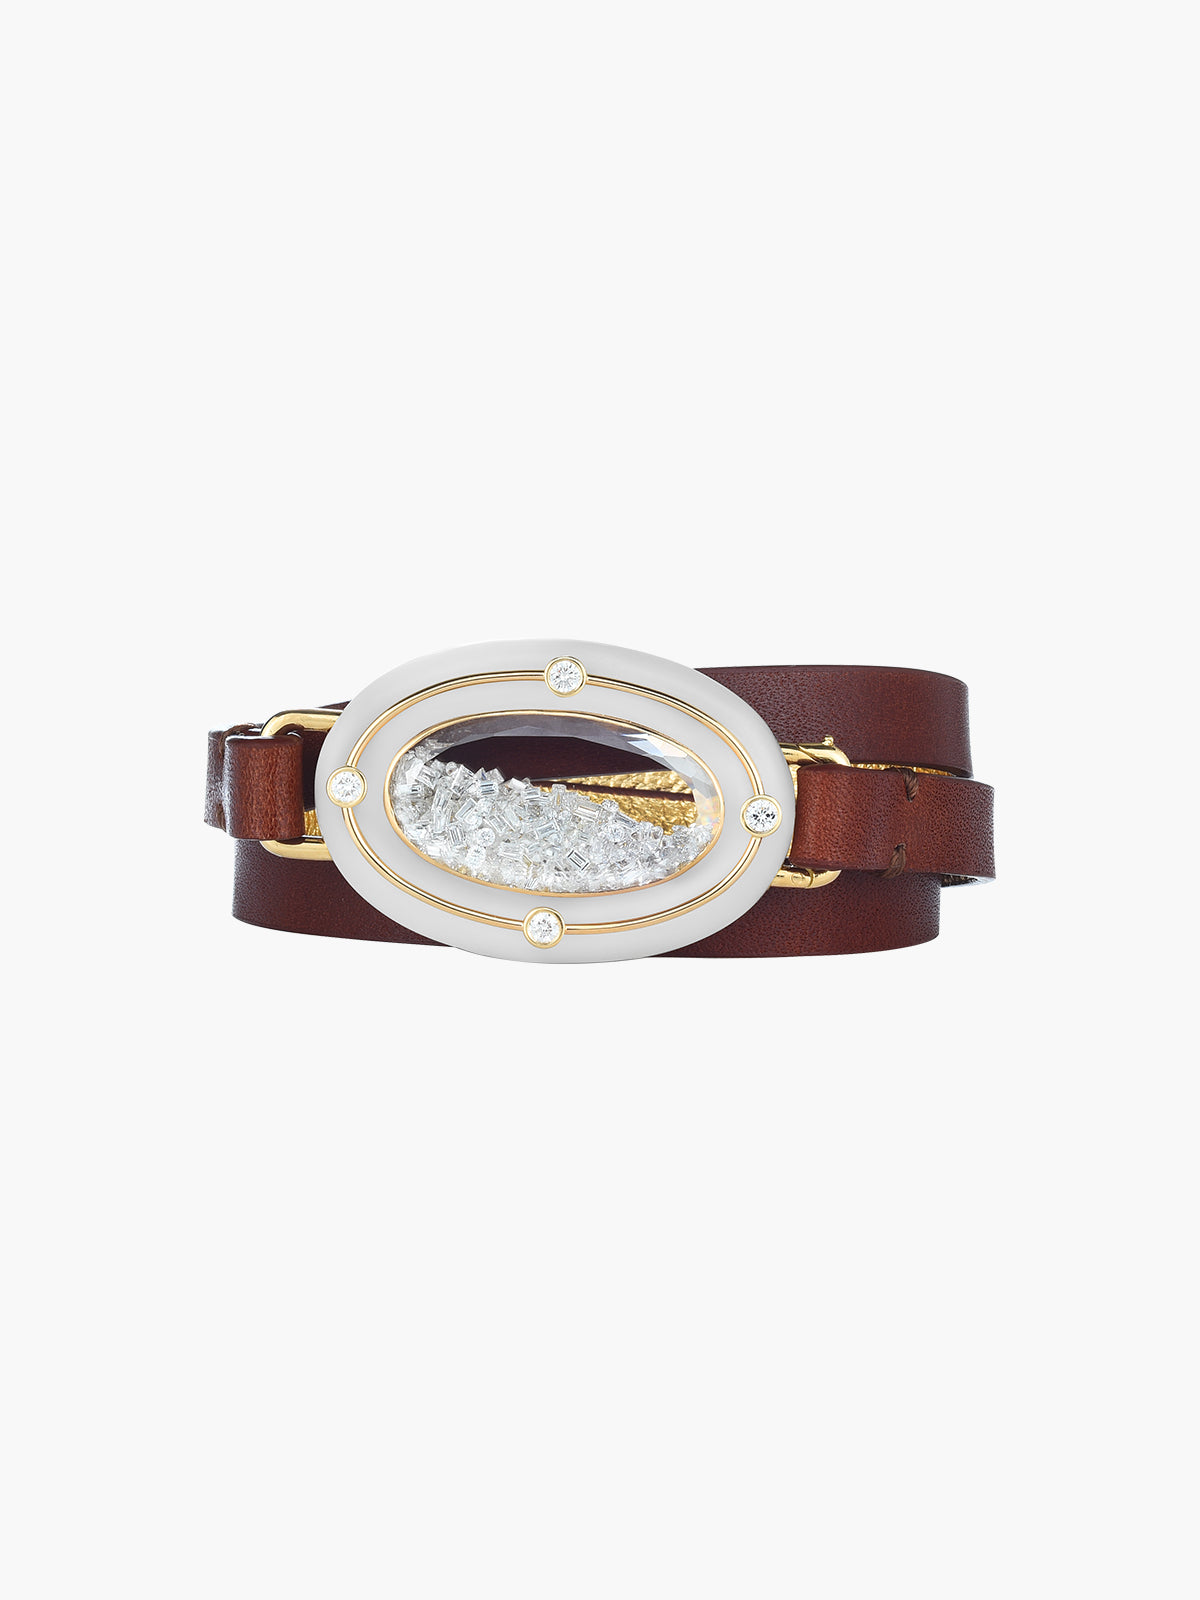 Tagua Wrap Bracelet - Fashionkind